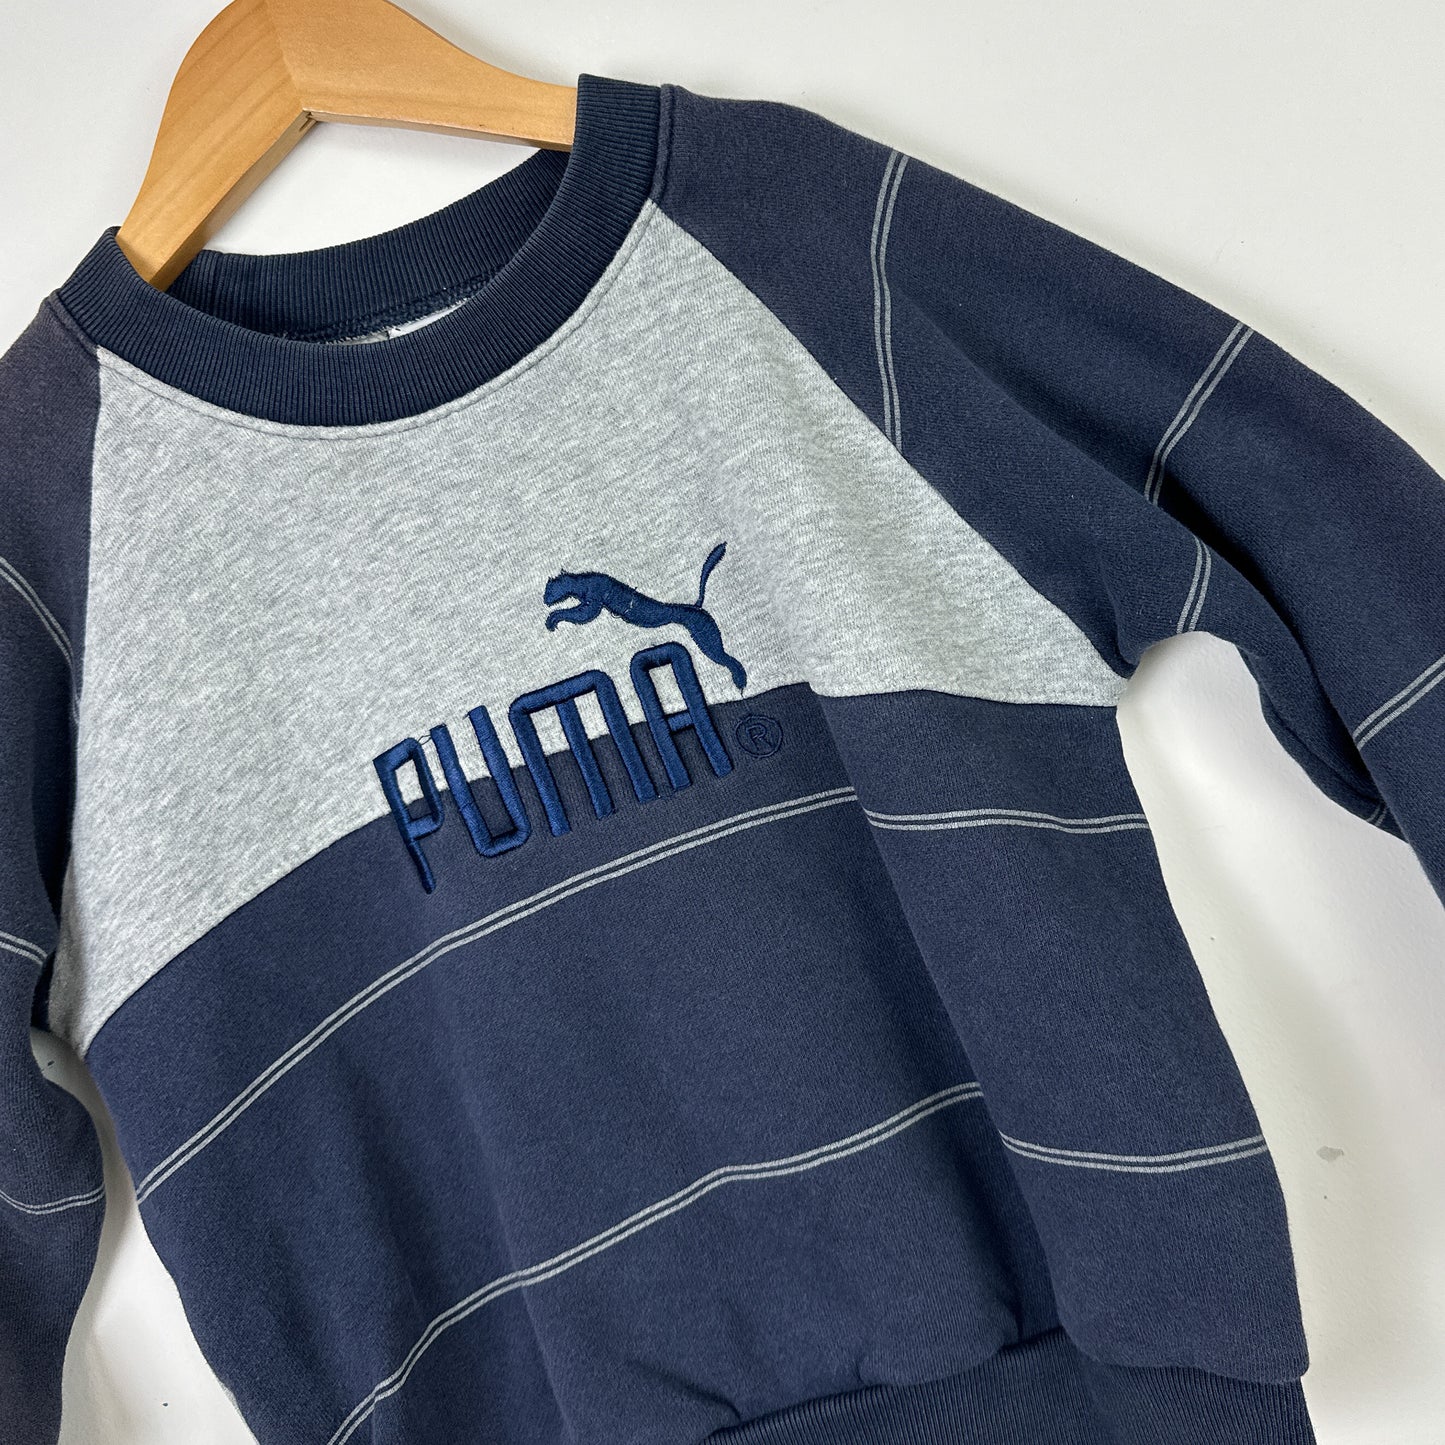 Vintage Kids Puma Sweatshirt - Size 5-6yr